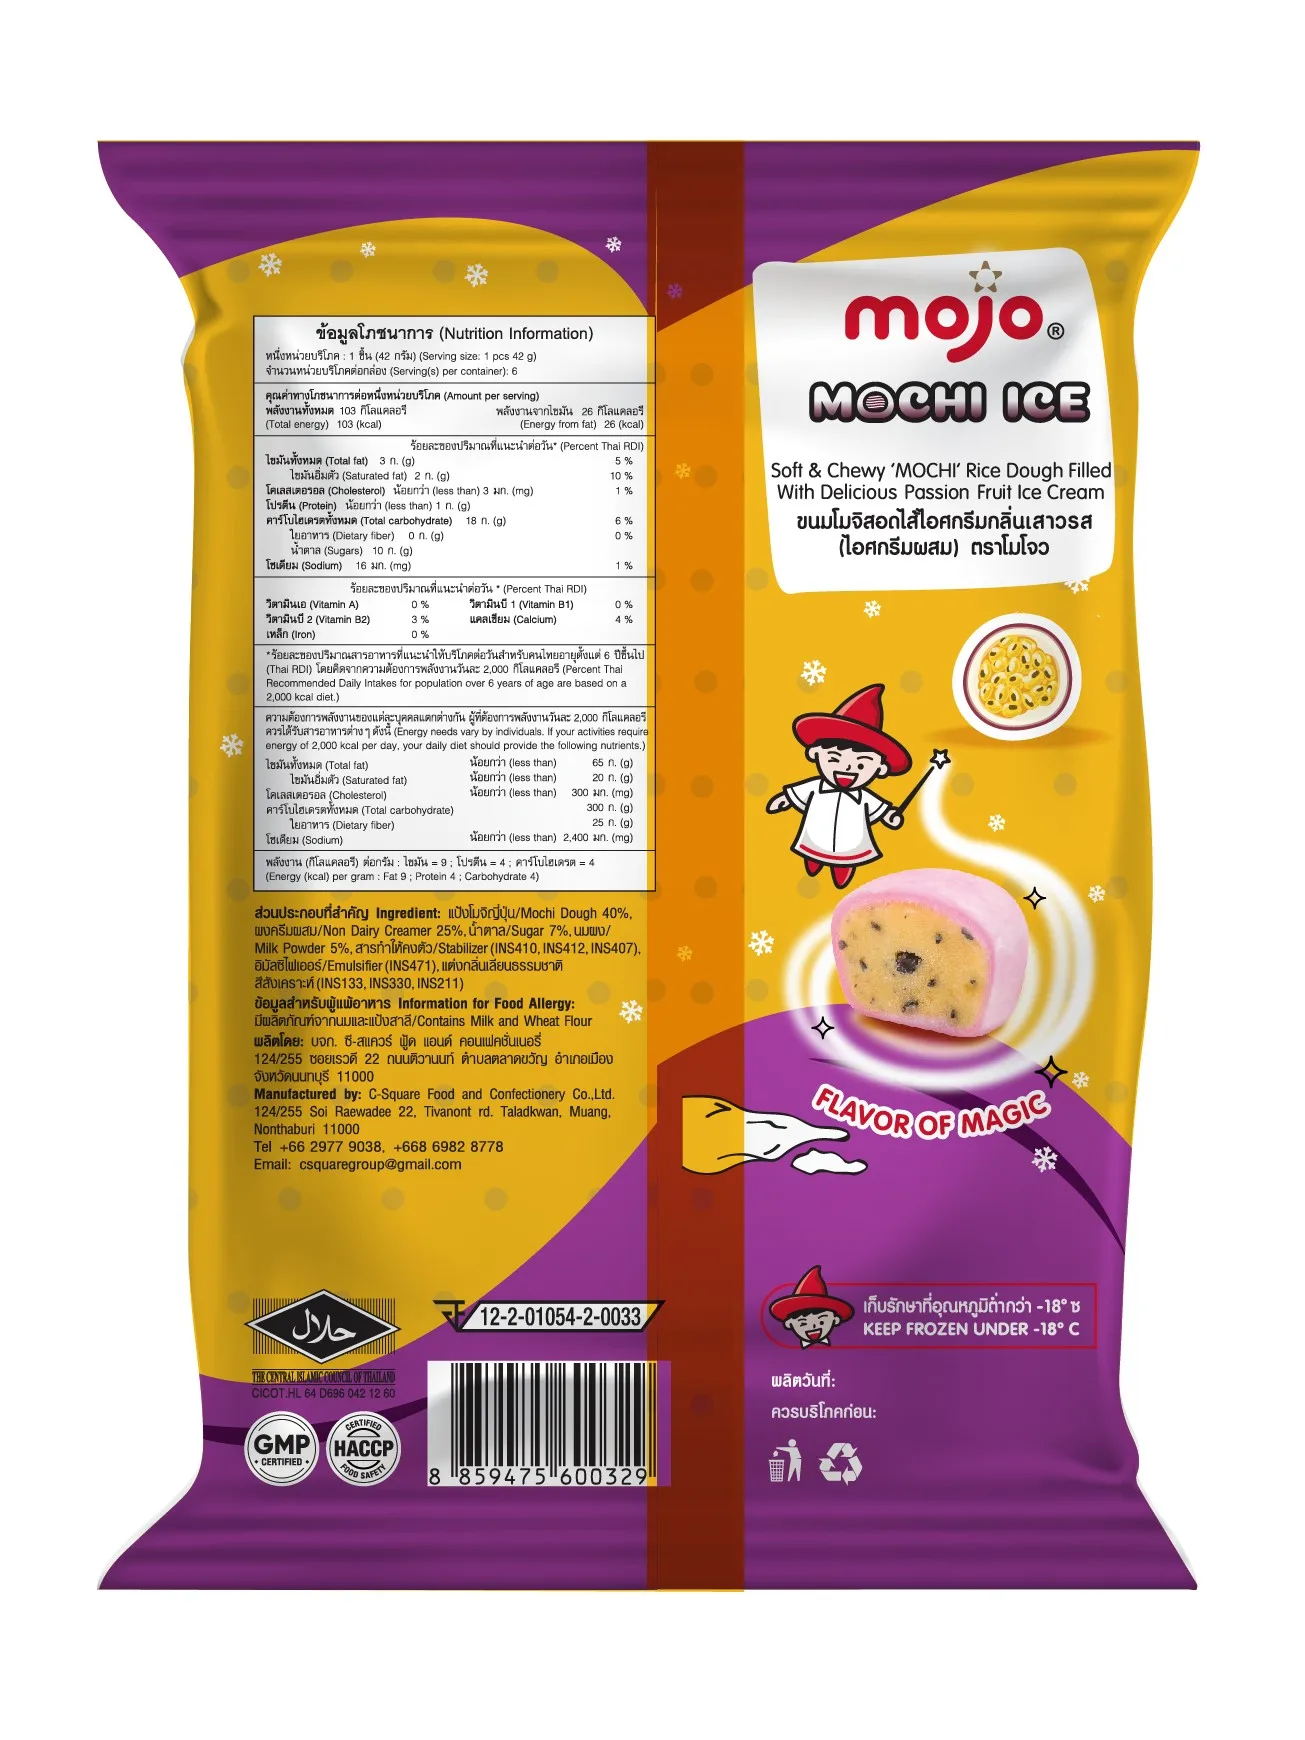 Premium Product & High Quality MOJO Mochi Ice Cream Passion Fruit